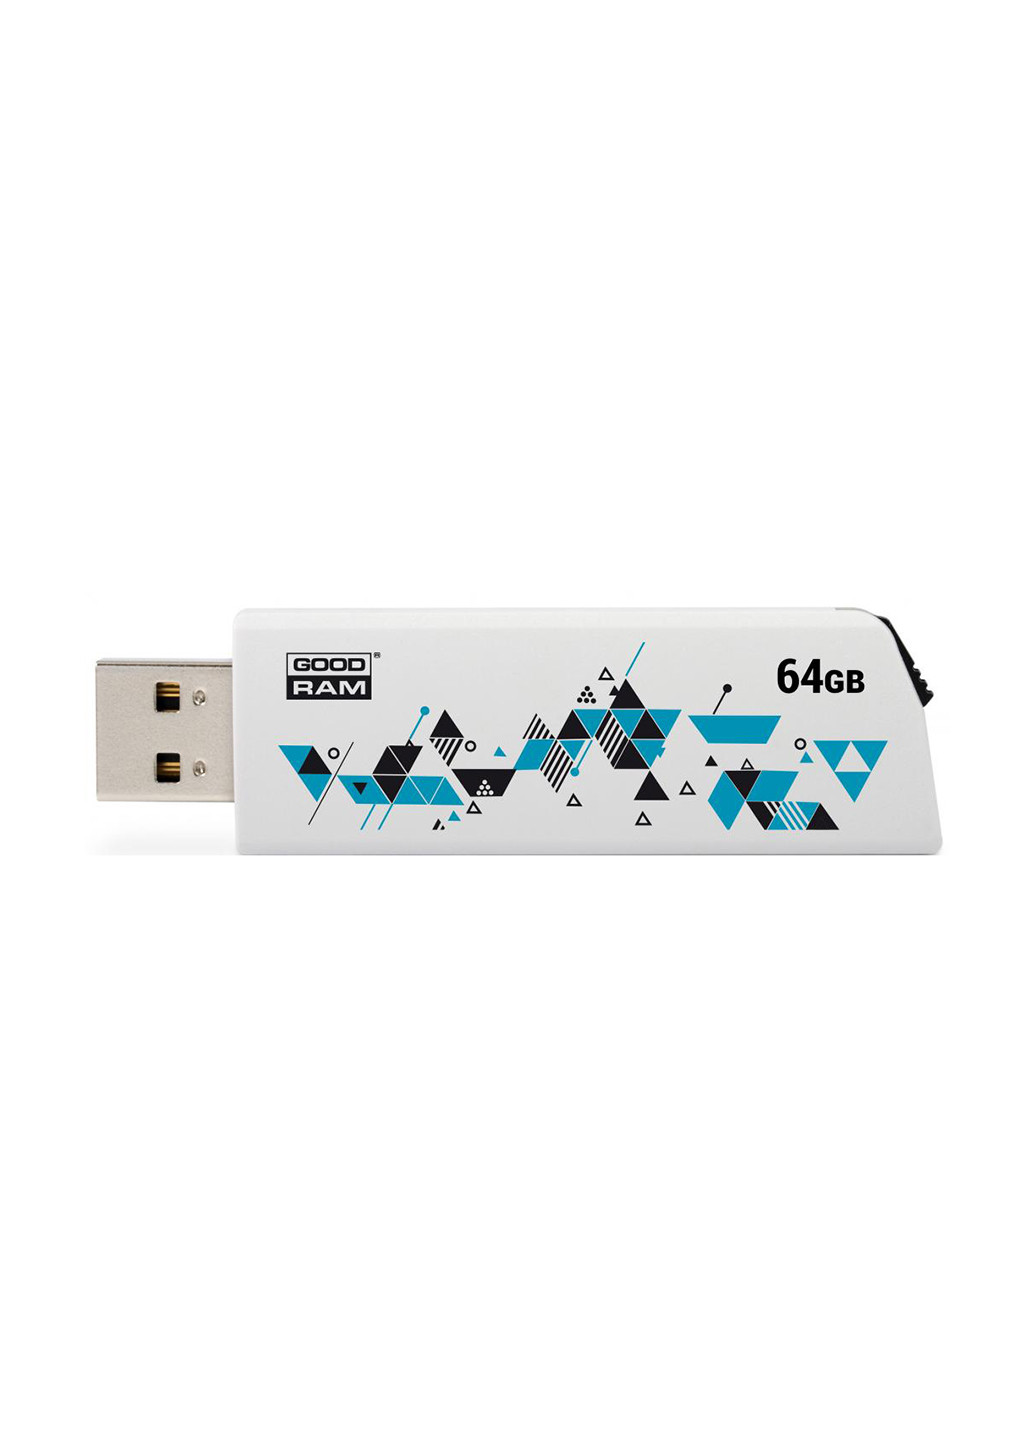 Флеш пам'ять USB 64GB USB 2.0 (UCL2-0640W0R11) White Goodram флеш память usb goodram 64gb usb 2.0 (ucl2-0640w0r11) white (142457621)